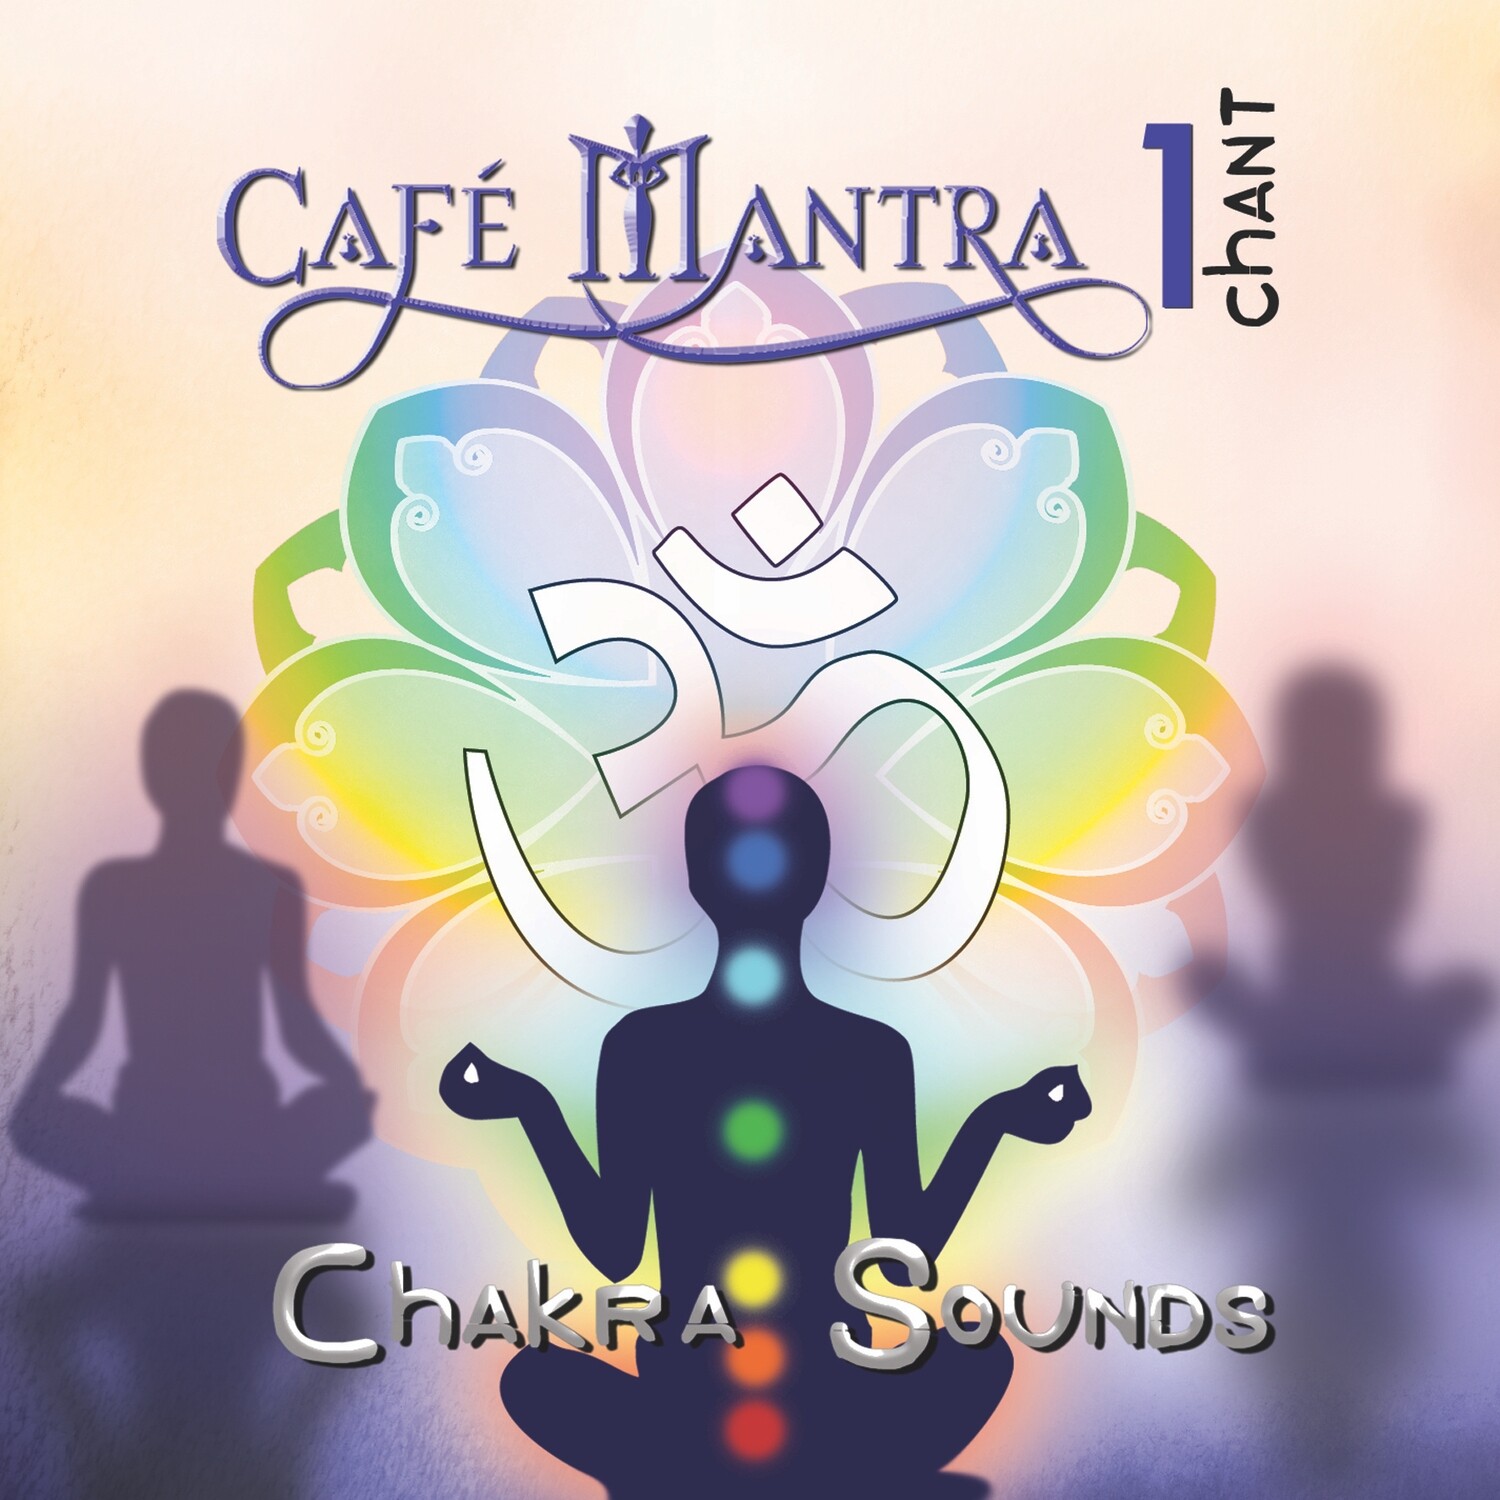 DOWNLOAD: Cafe Mantra Chant1 CHAKRA SOUNDS